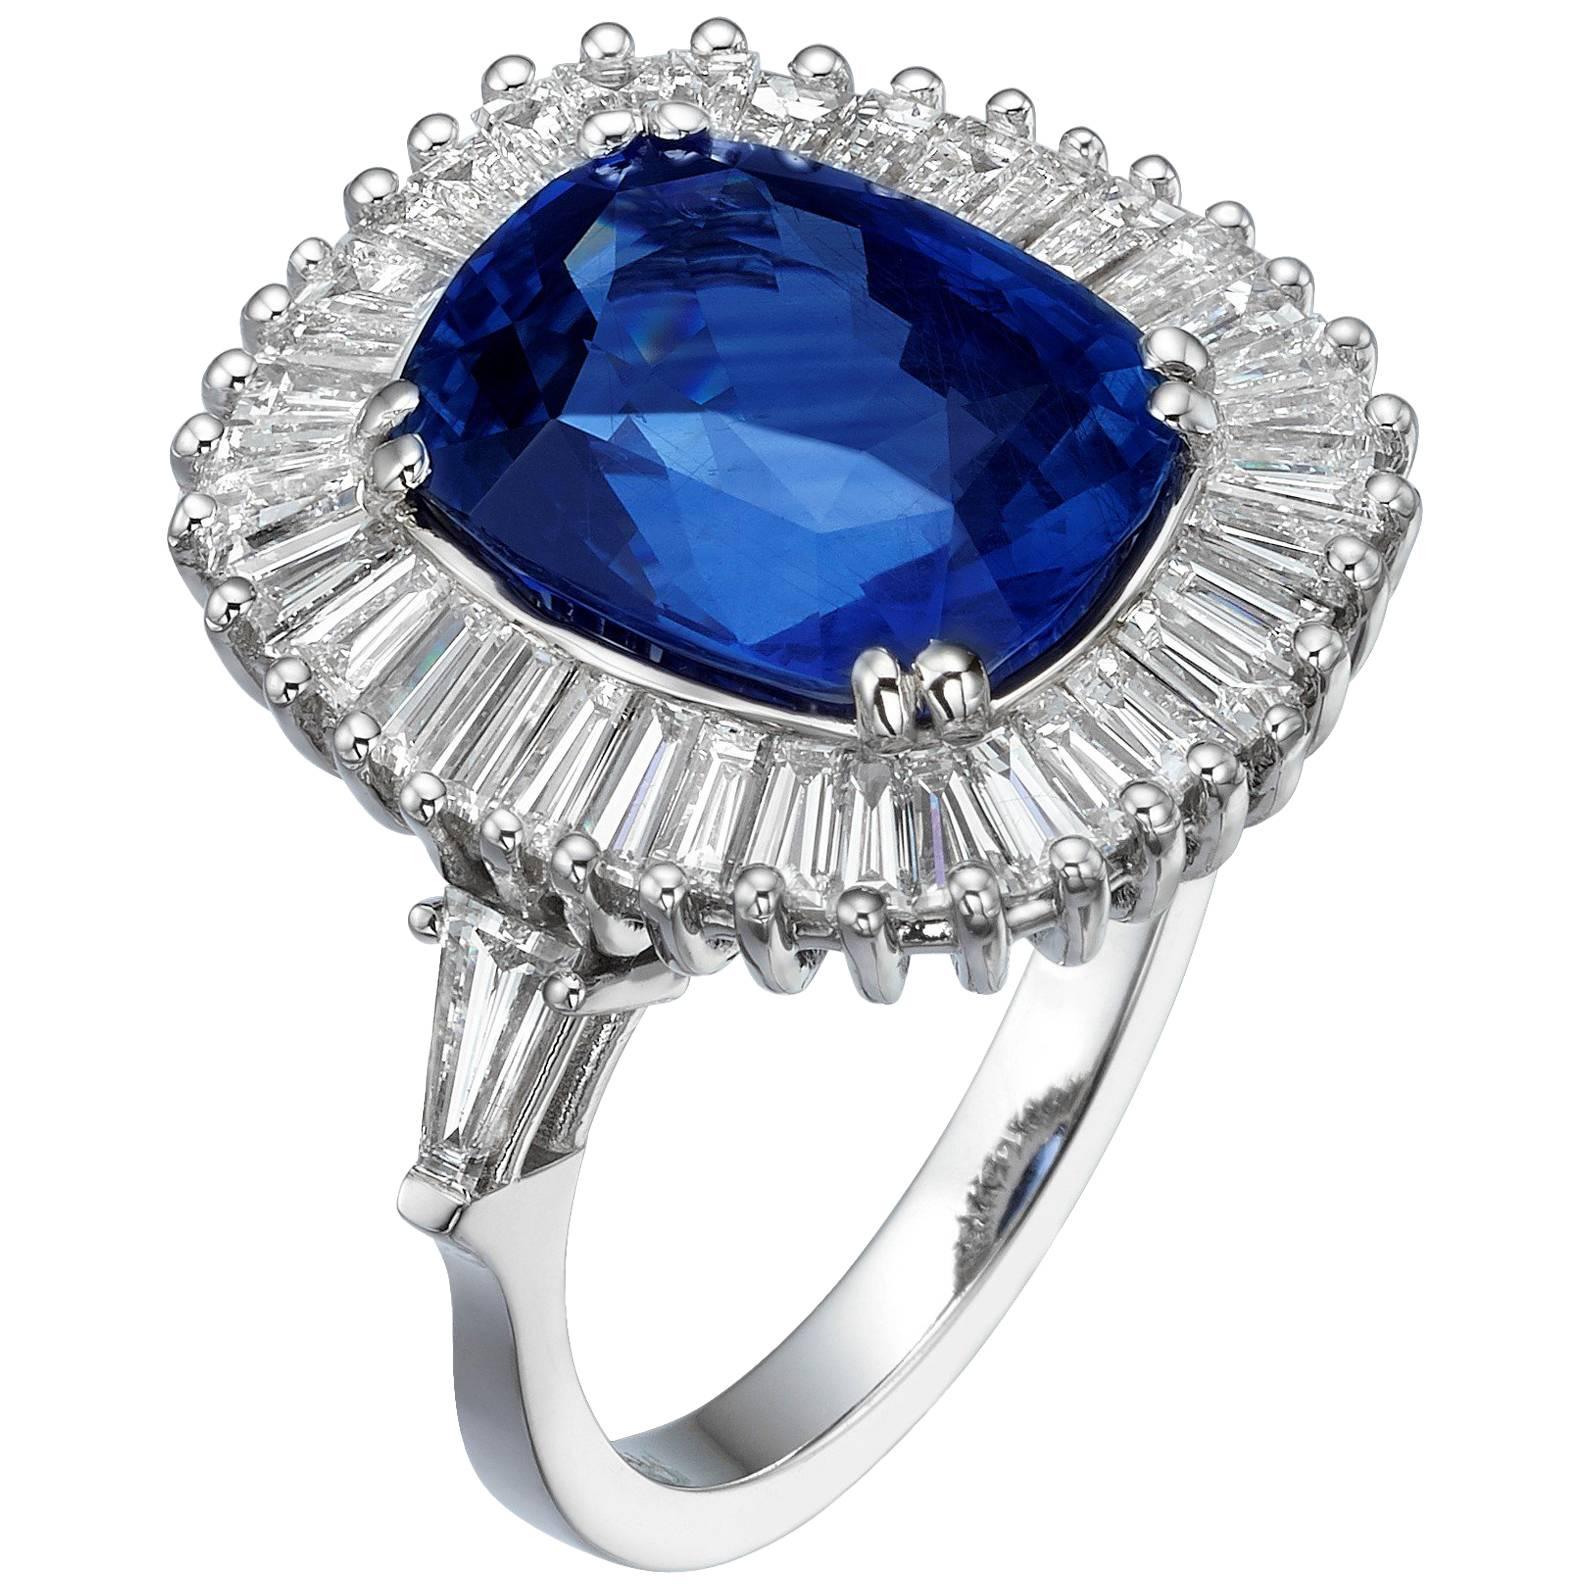 Ballerina Style 7.63 Carat Cushion Cut Blue Sapphire & Diamonds engagment ring. 